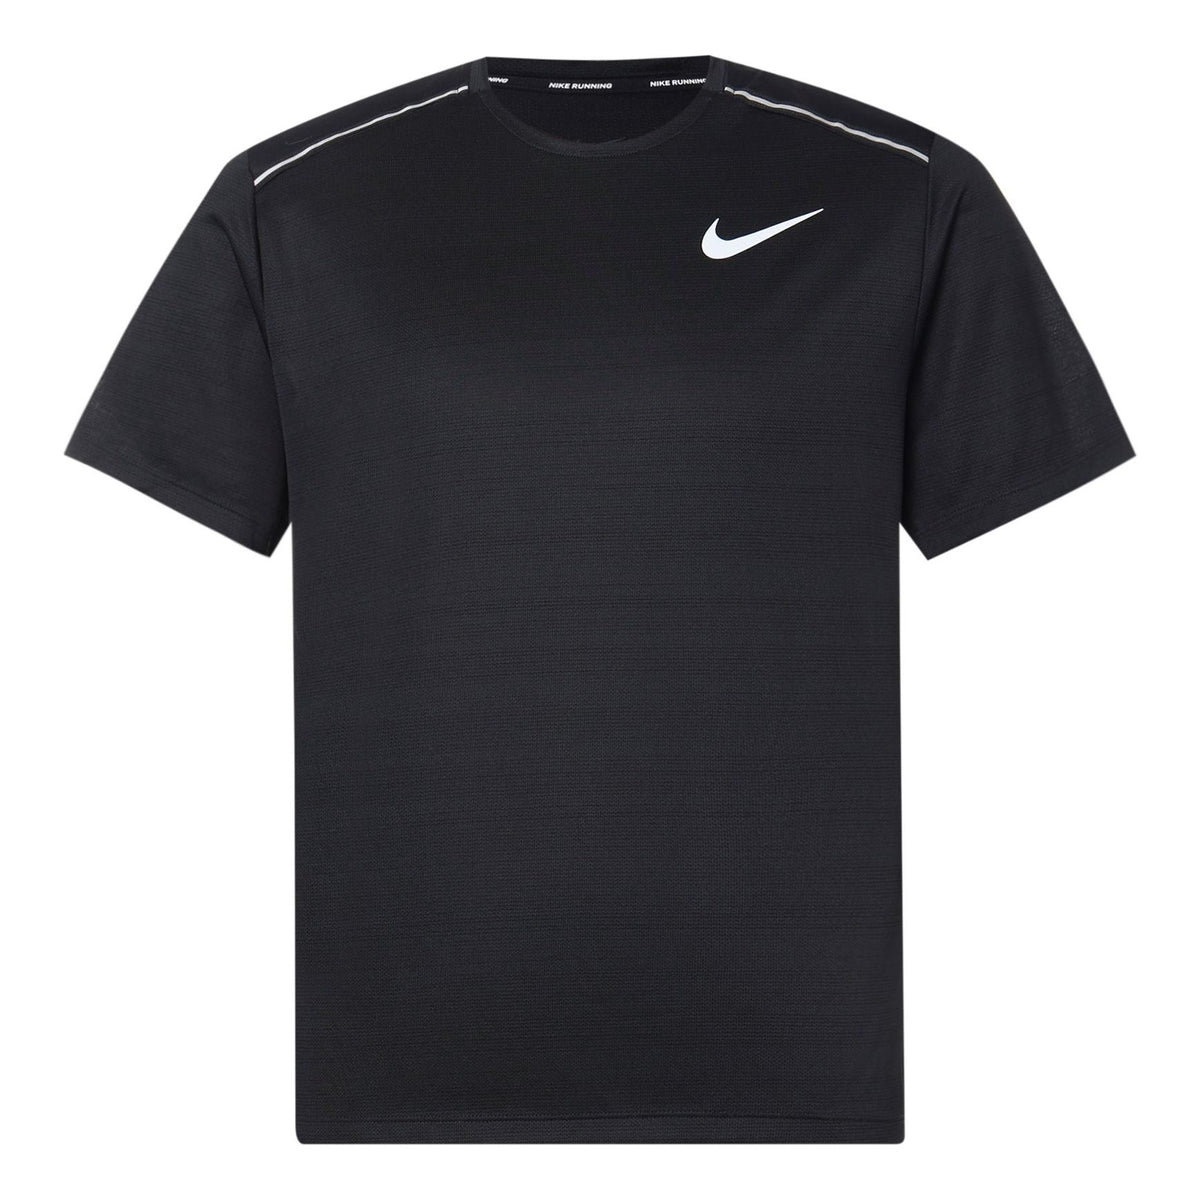 Nike Athleisure Casual Sports Round Neck Short Sleeve Black AJ7566-010